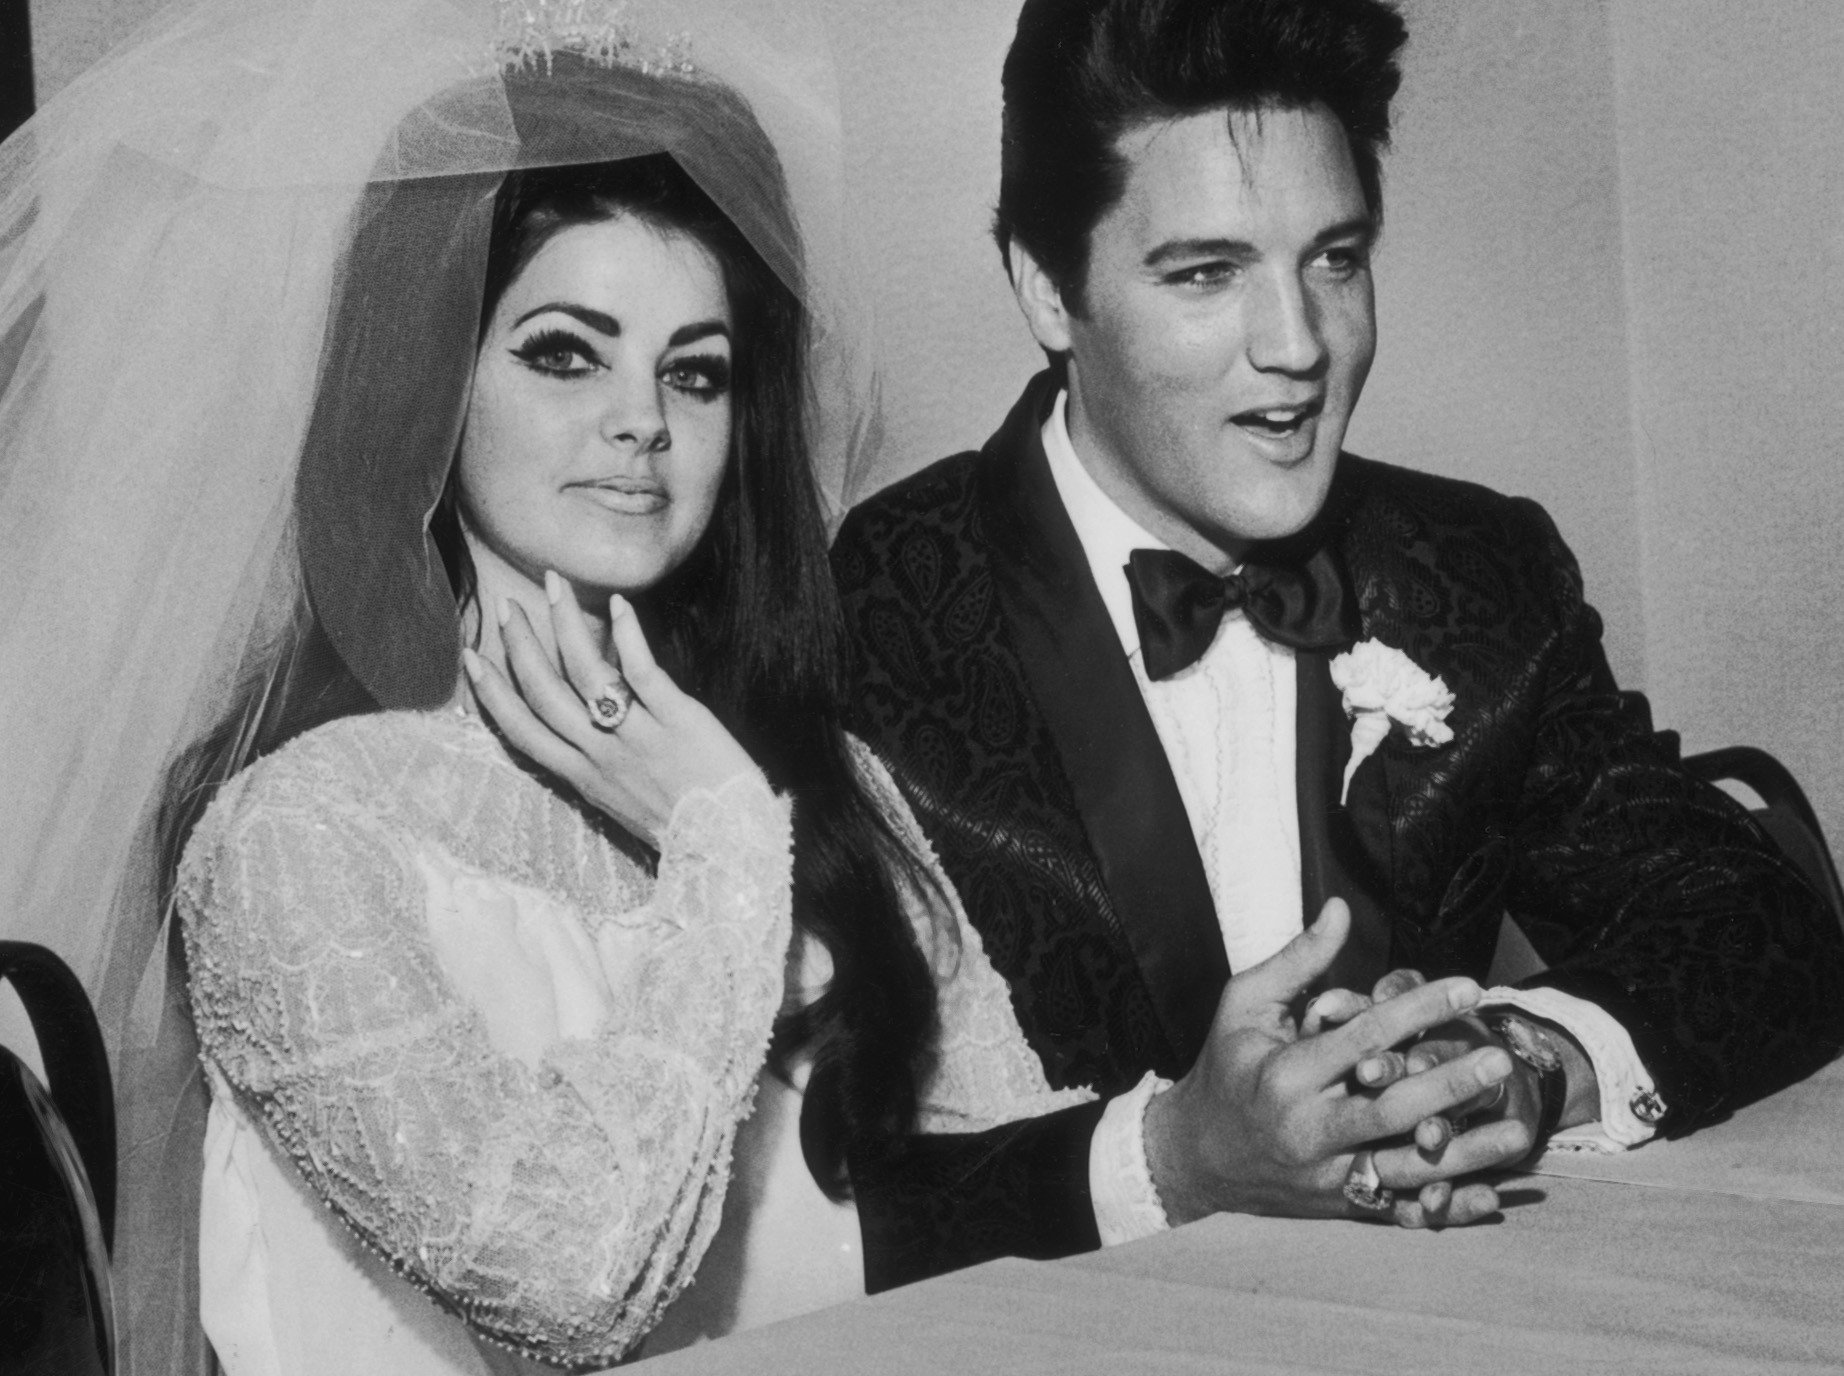 Priscilla and Elvis Presley in black-and-white